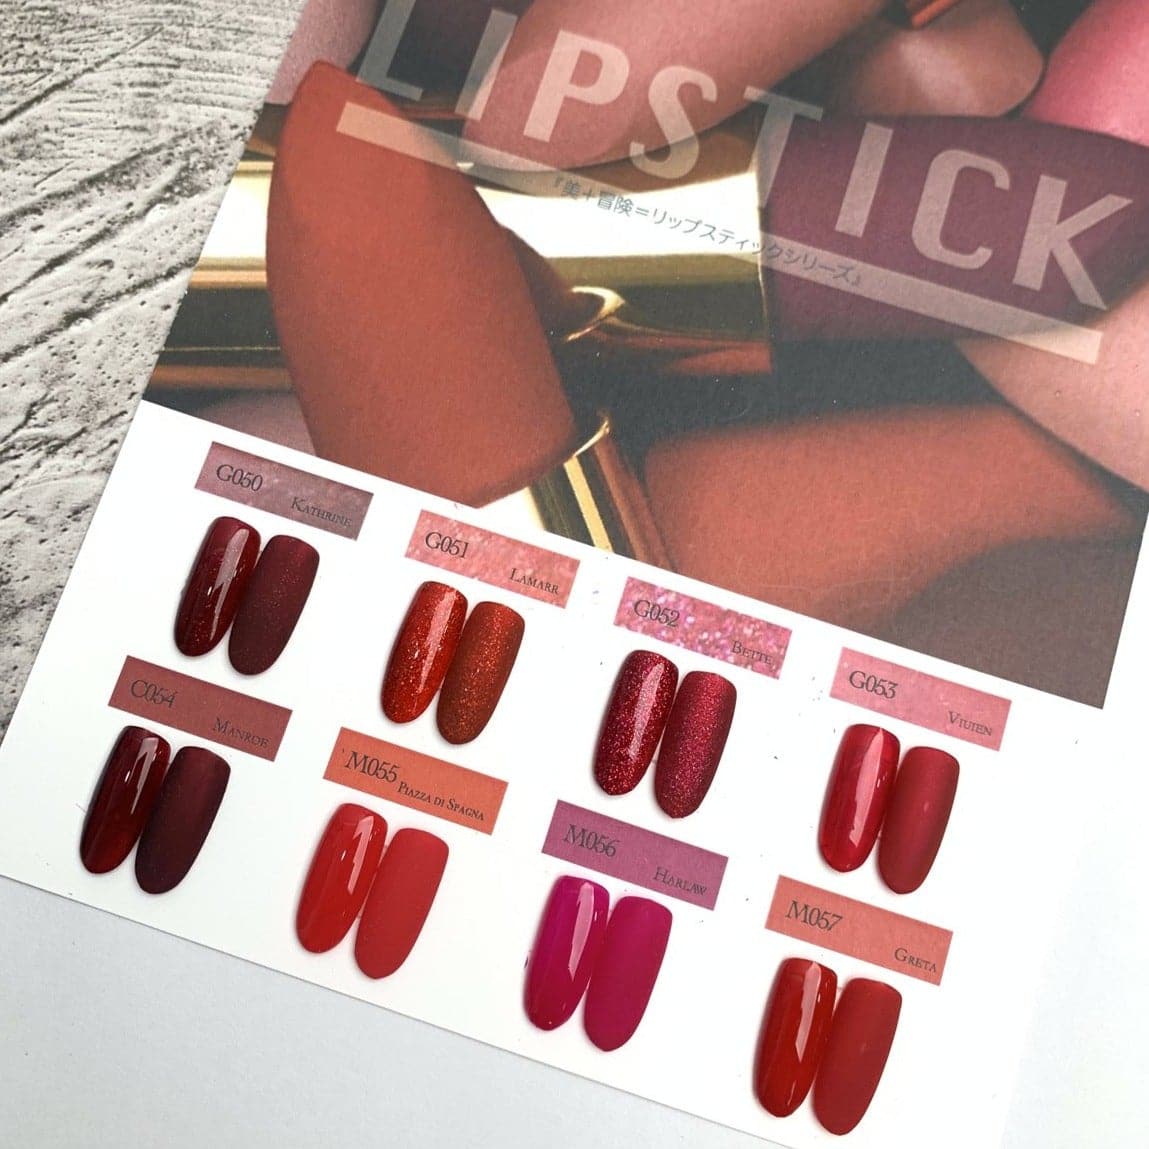 CANDY+ Lipstick Series - 8 Colour Gel